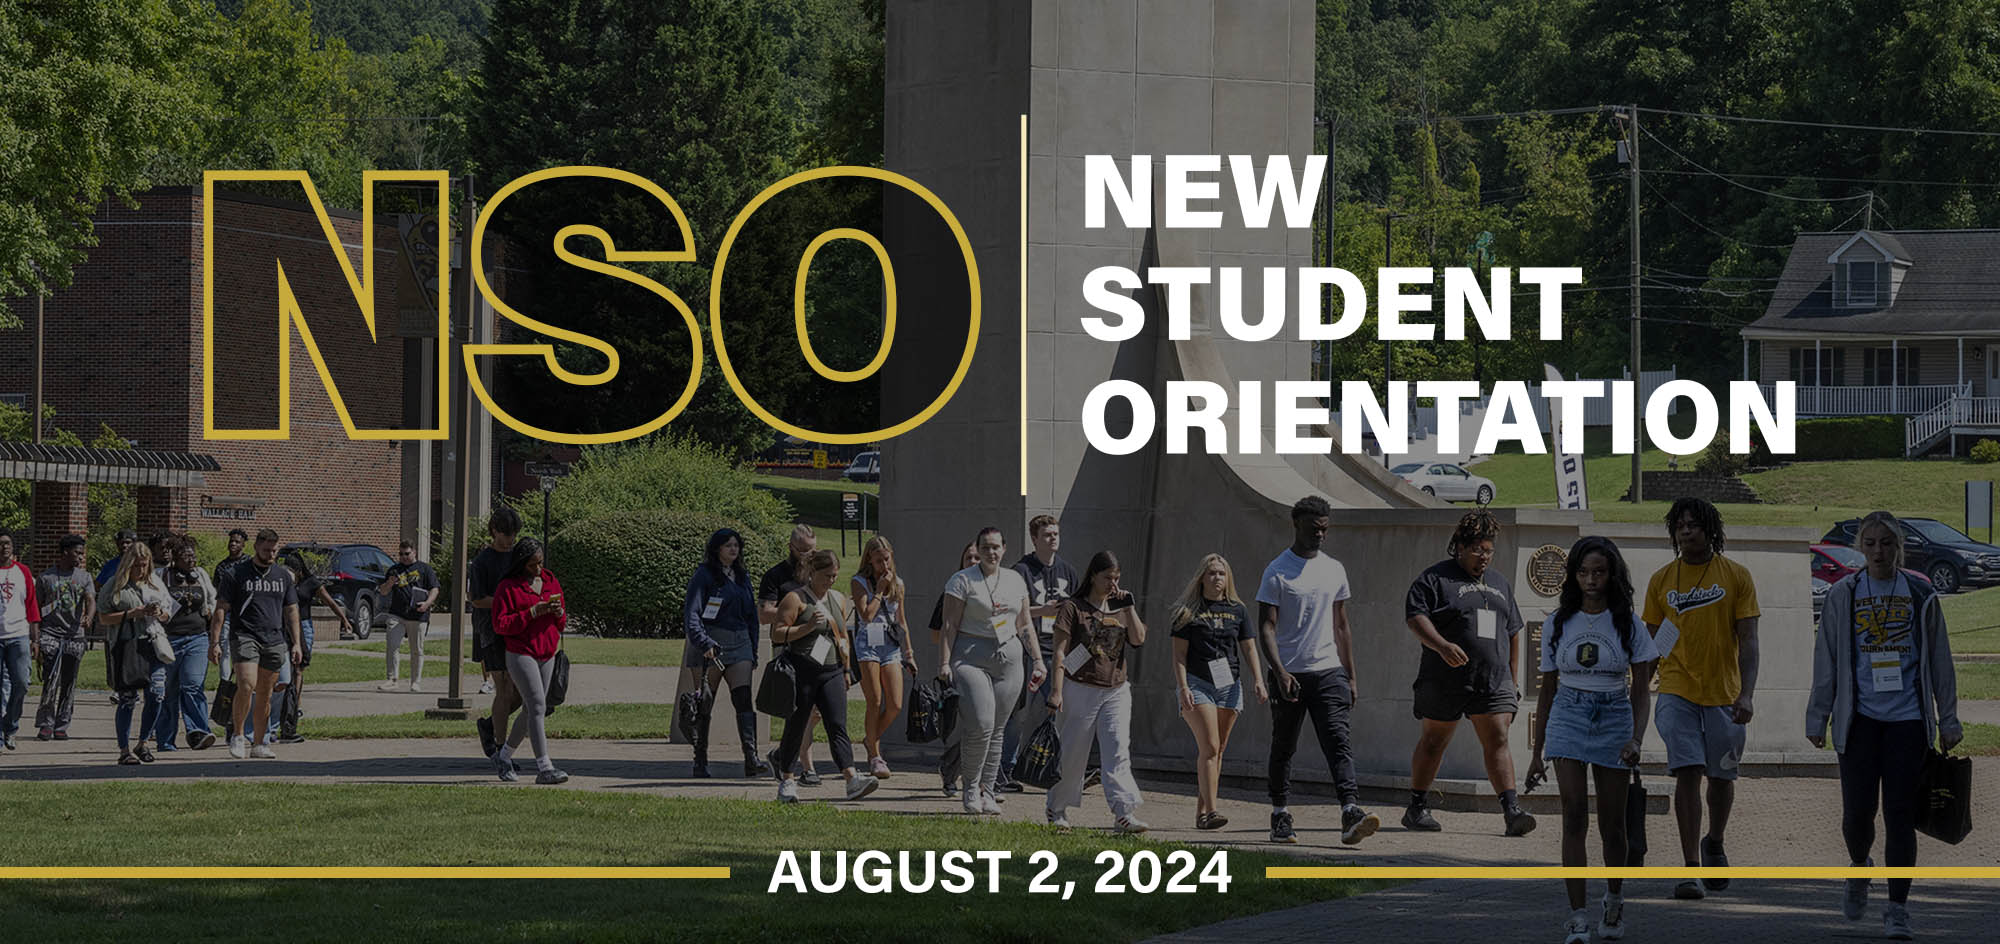 New Student Orientation August 2, 2024